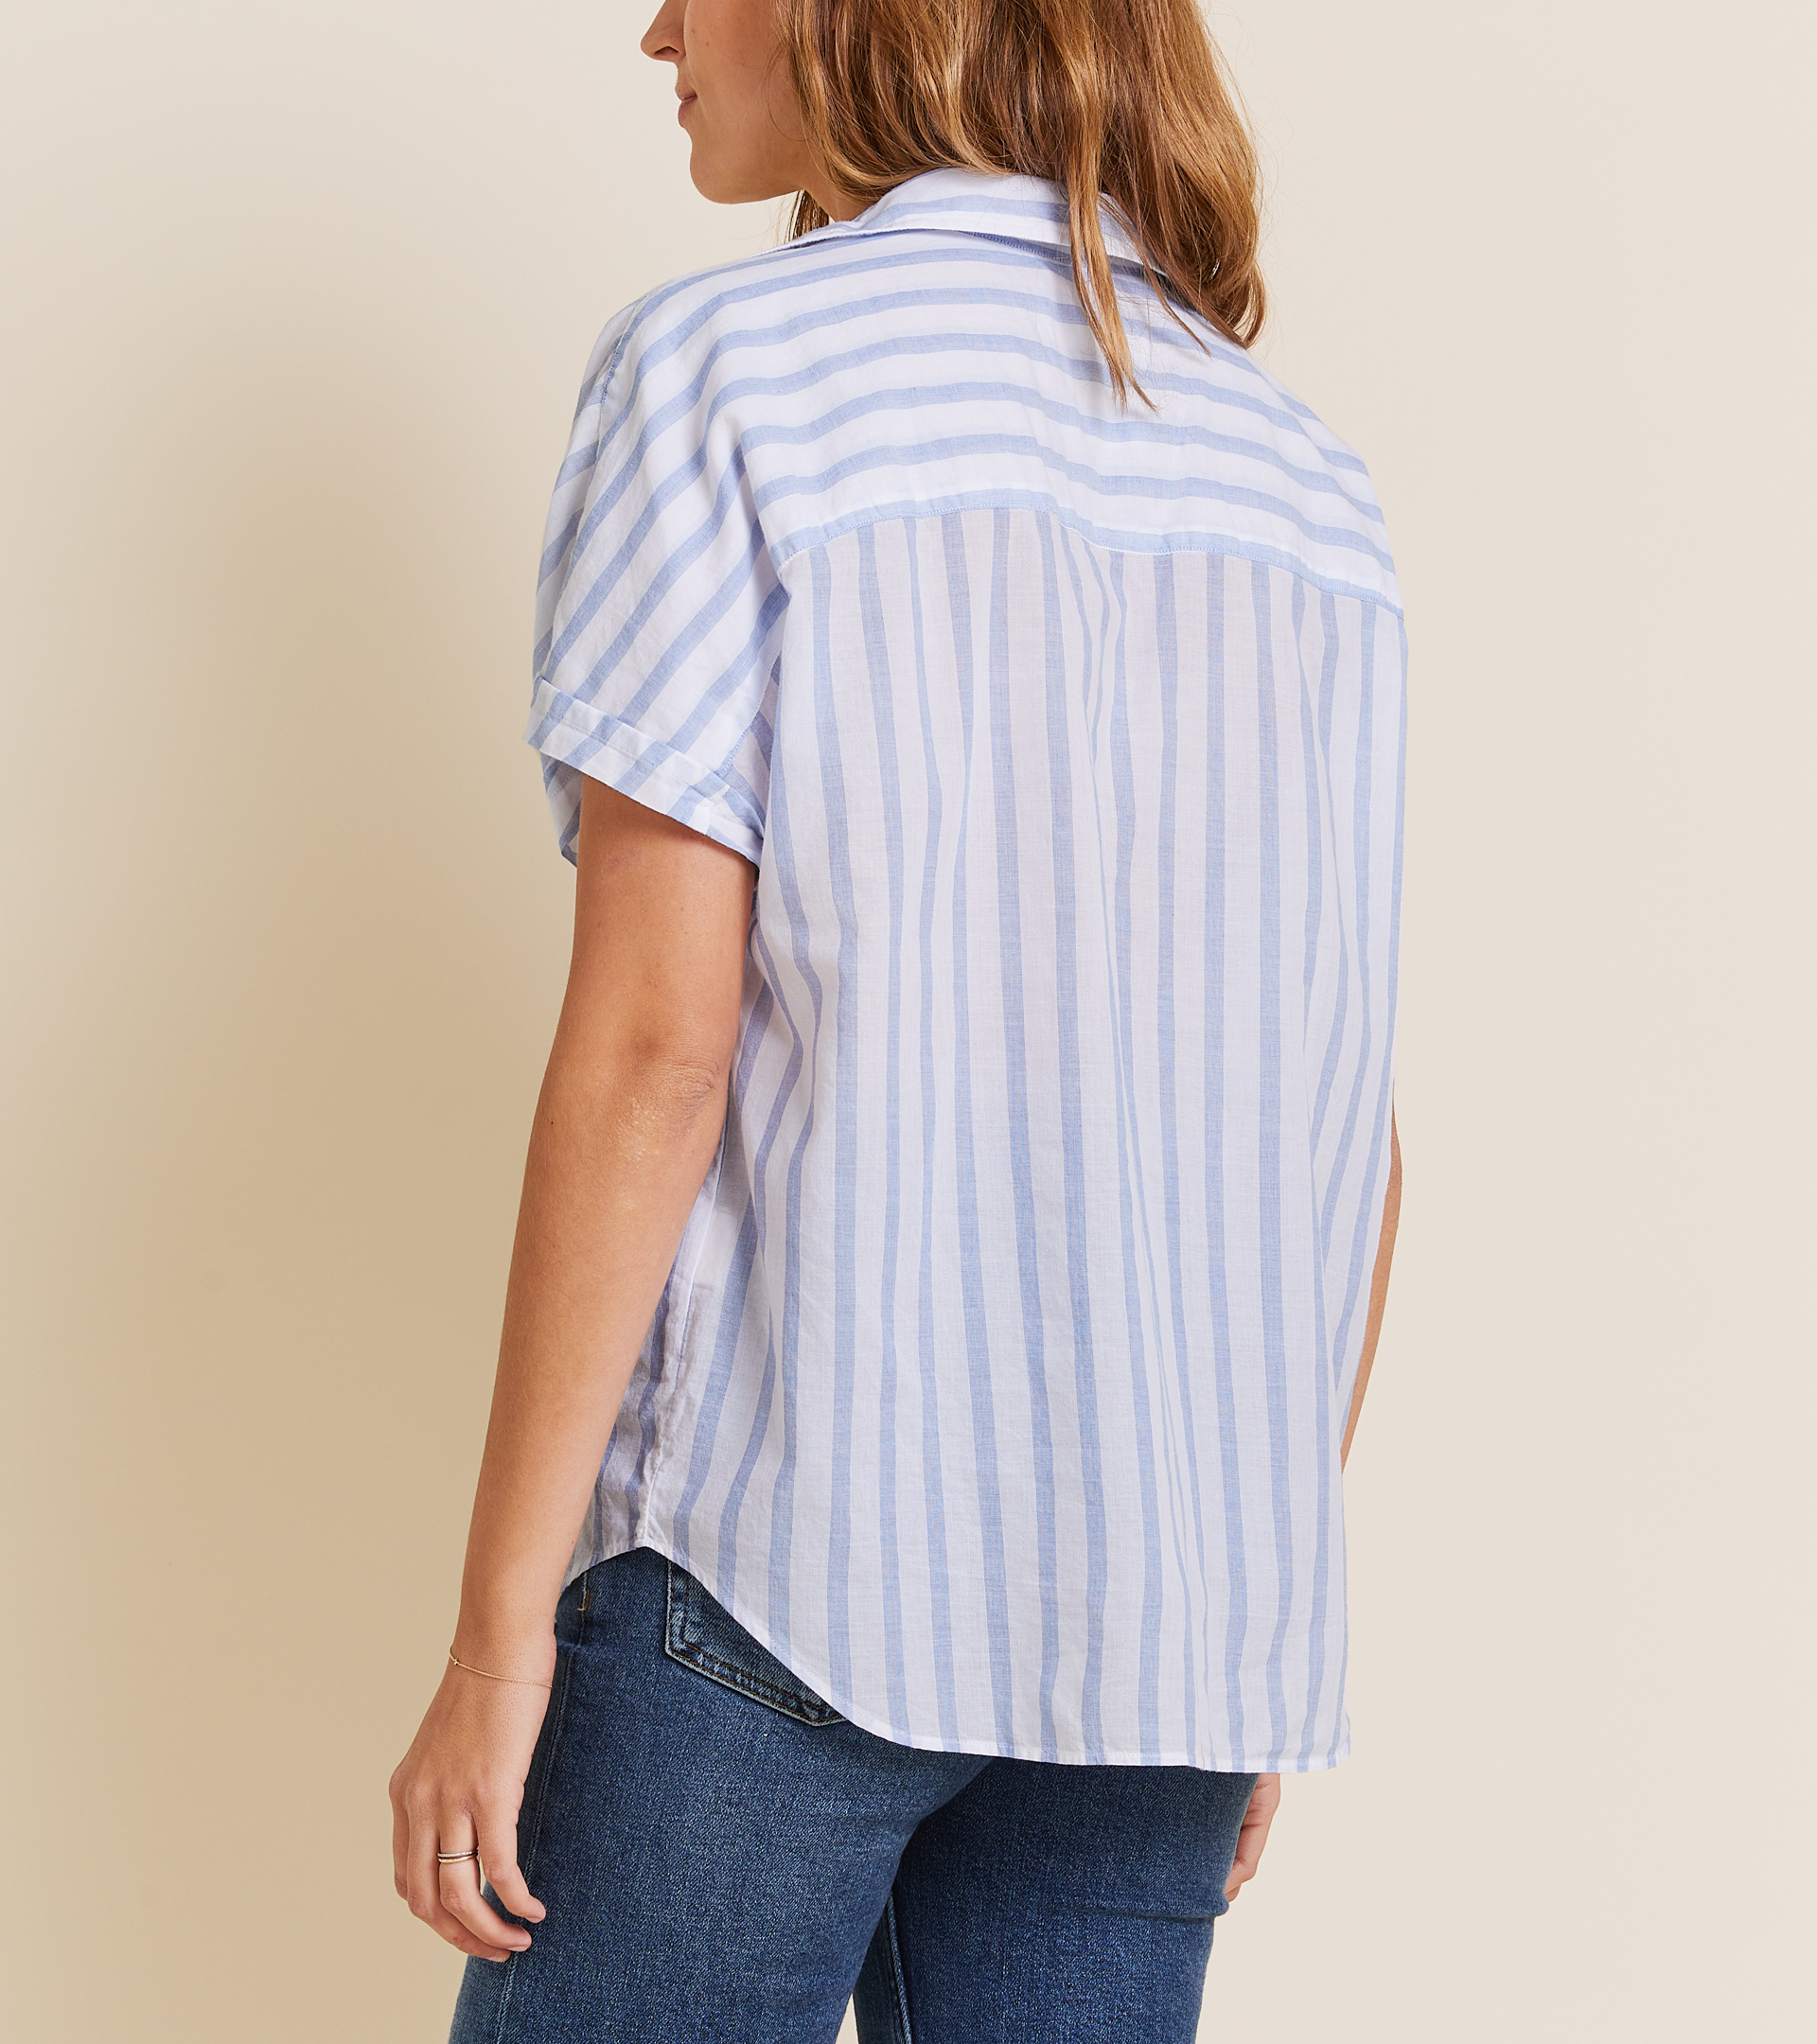 The Artist Short Sleeve Shirt Blue & White Stripe, Tissue Cotton view 2